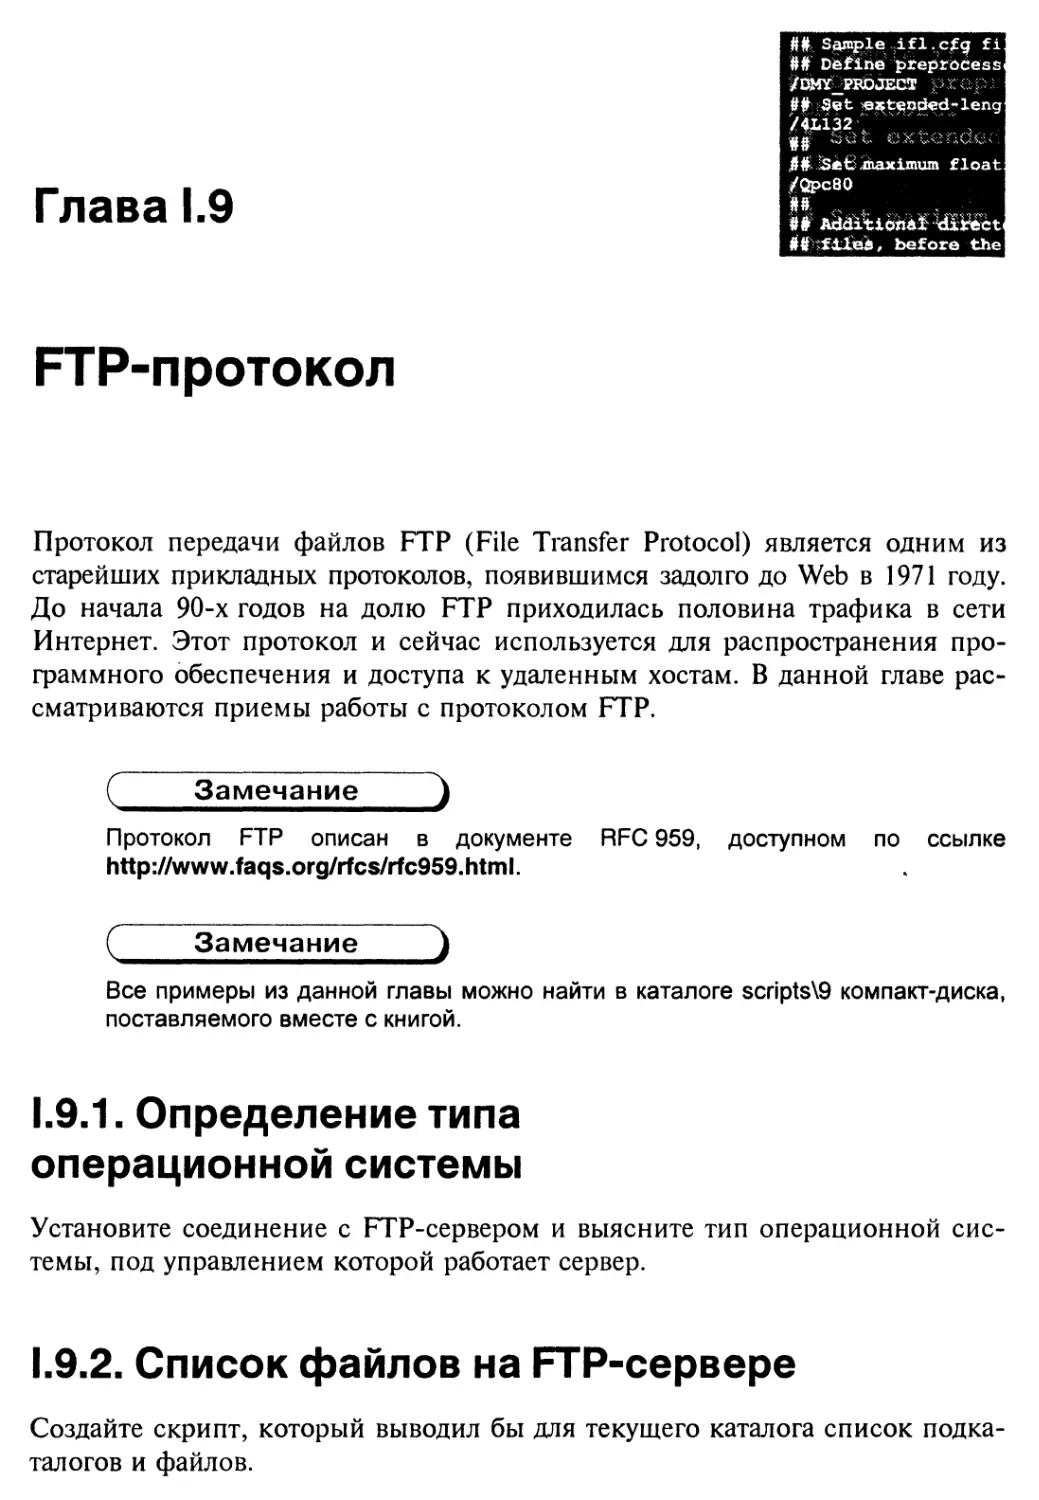 Глава 1.9. FTP-протокол
1.9.2. Список файлов на FTP-сервере